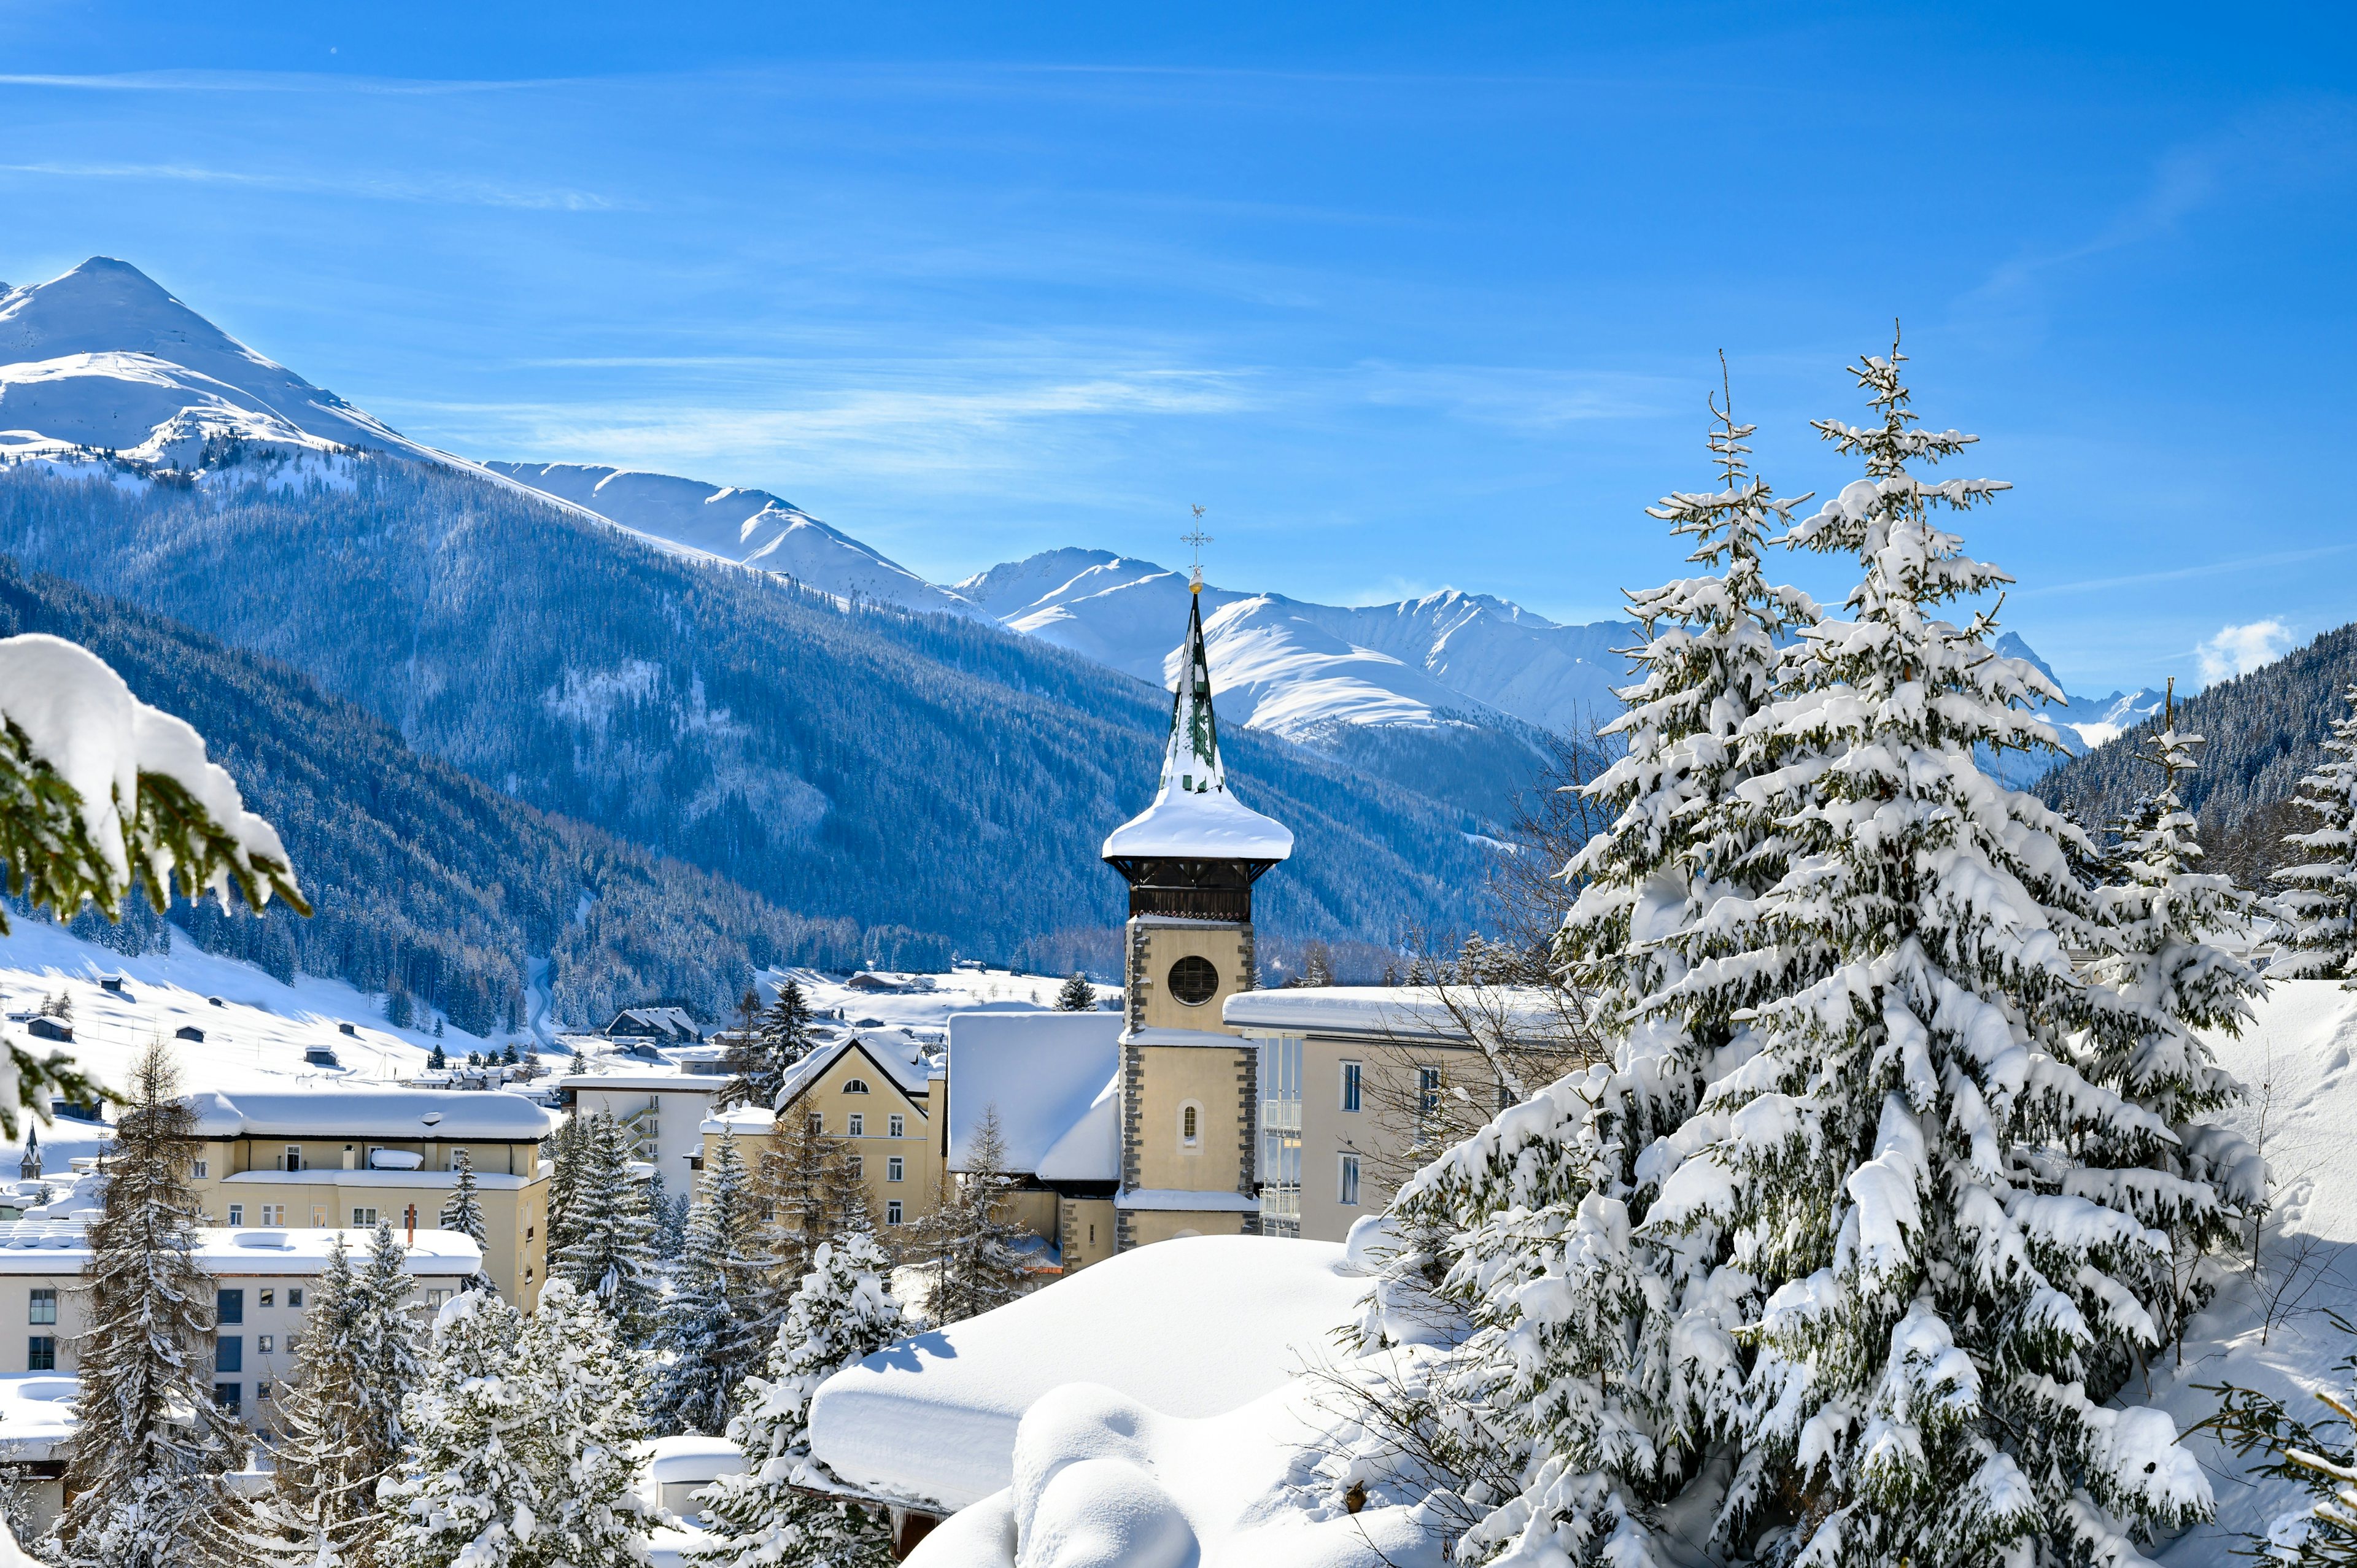 The picturesque winter scenery of Davos, Switzerland. Image: shutterstock 